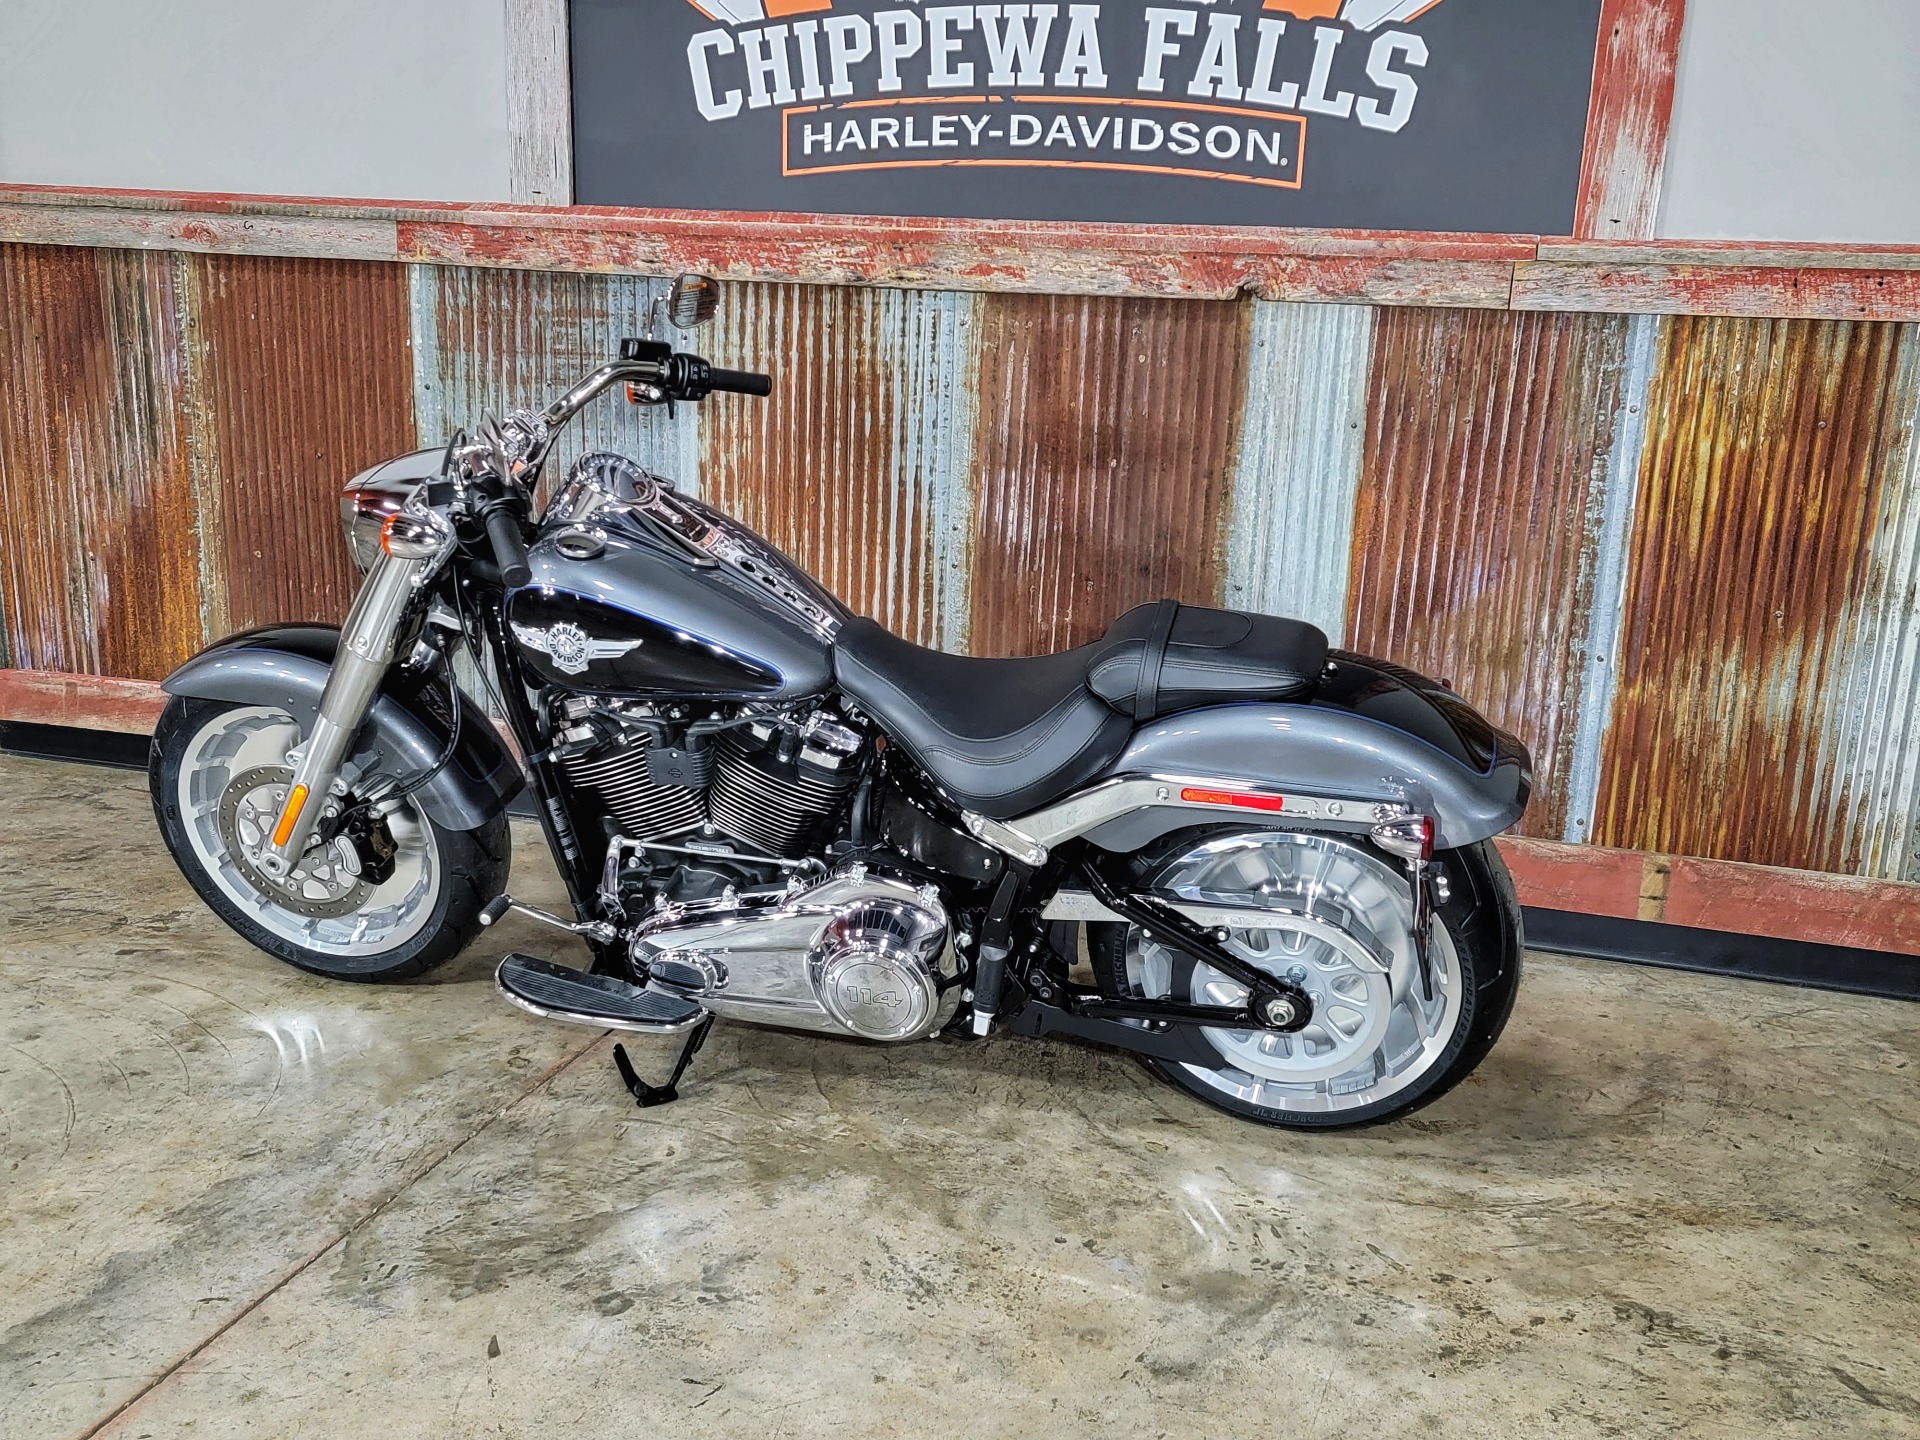 New 2021 Harley Davidson Fat Boy 114 Gauntlet Gray Metallic Vivid Black Motorcycles In Chippewa Falls Wi Fx058138